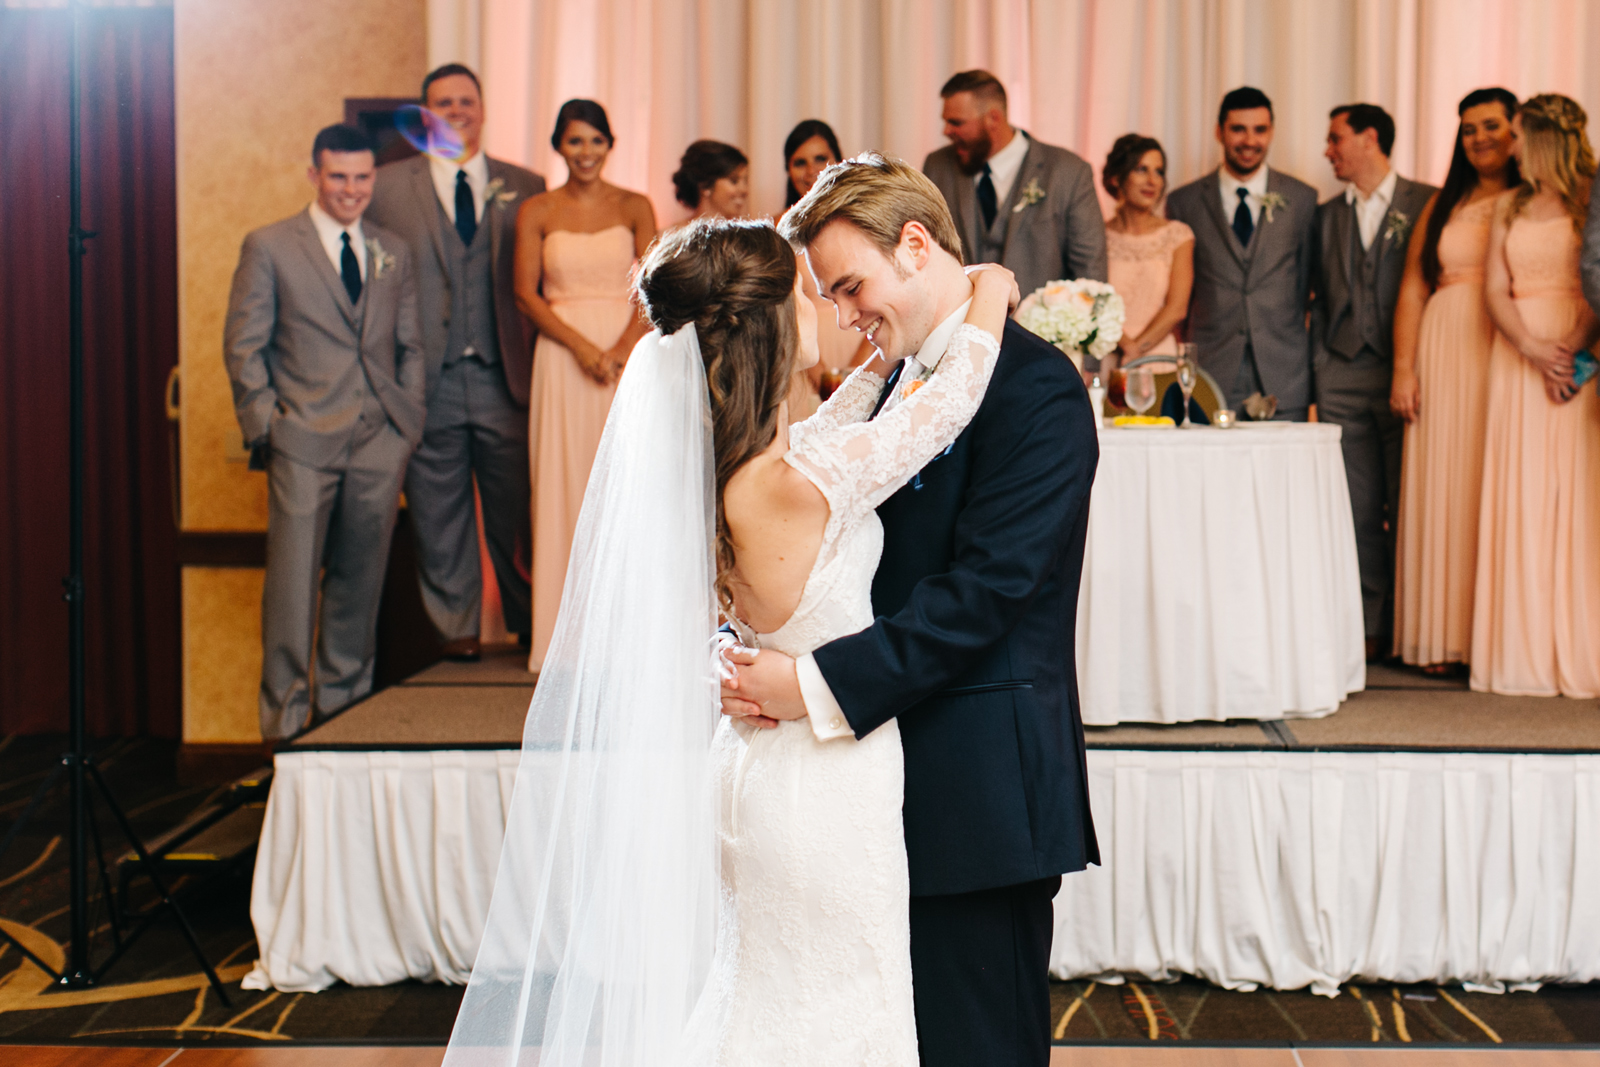 Nashville TN Wedding Photographer Laura K. Allen | 2017 Best of Weddings, Engagements, and Portraits 